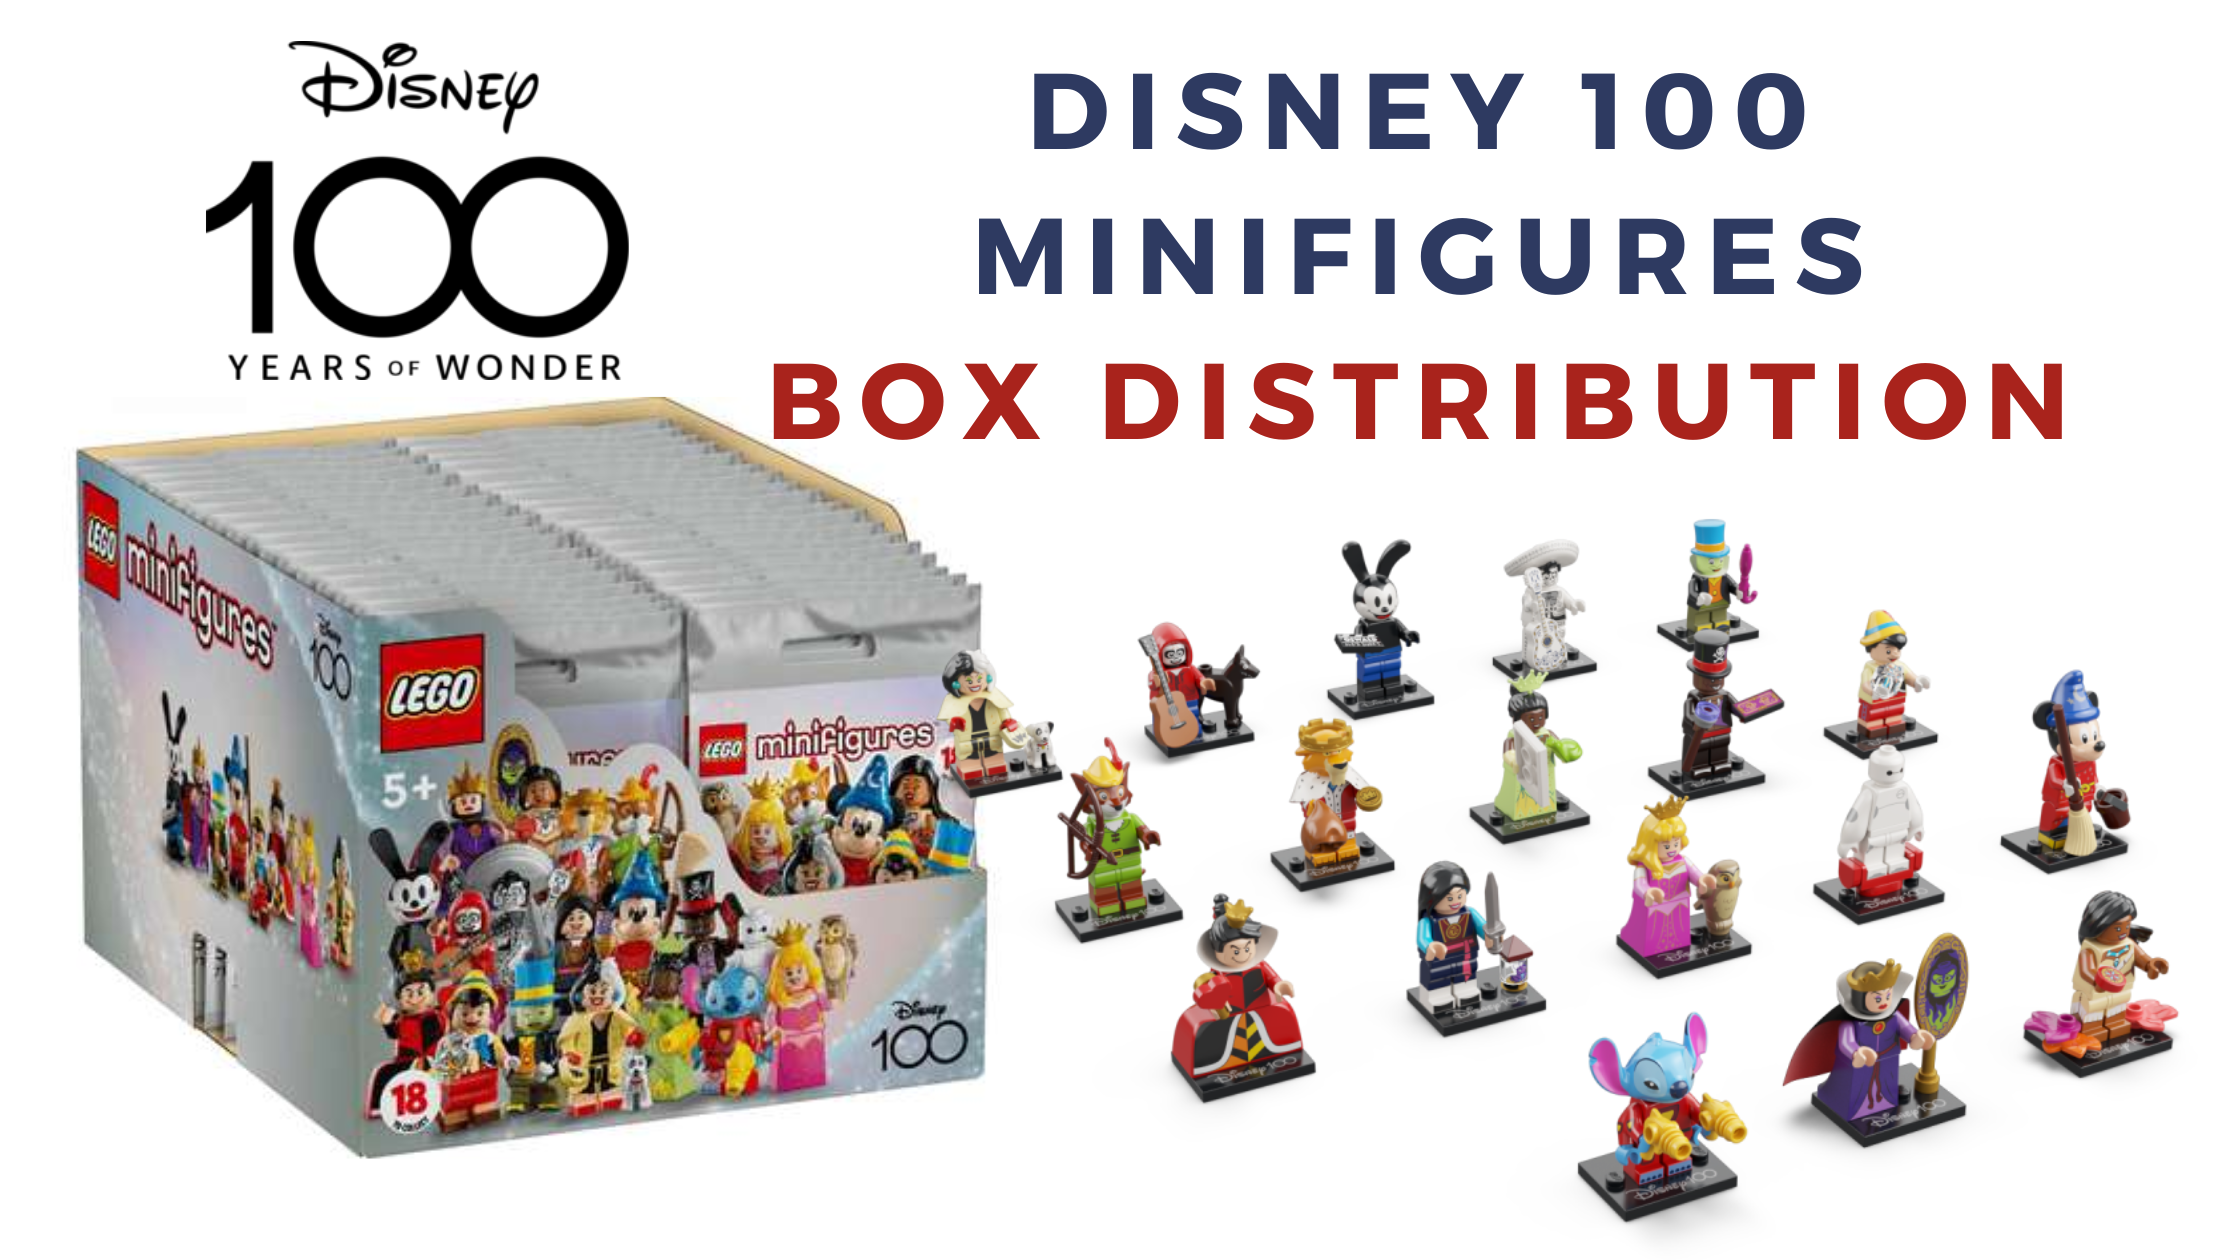 NEW - IN STOCK!! - LEGO 71038 - You Pick! Disney 100 Anniversary